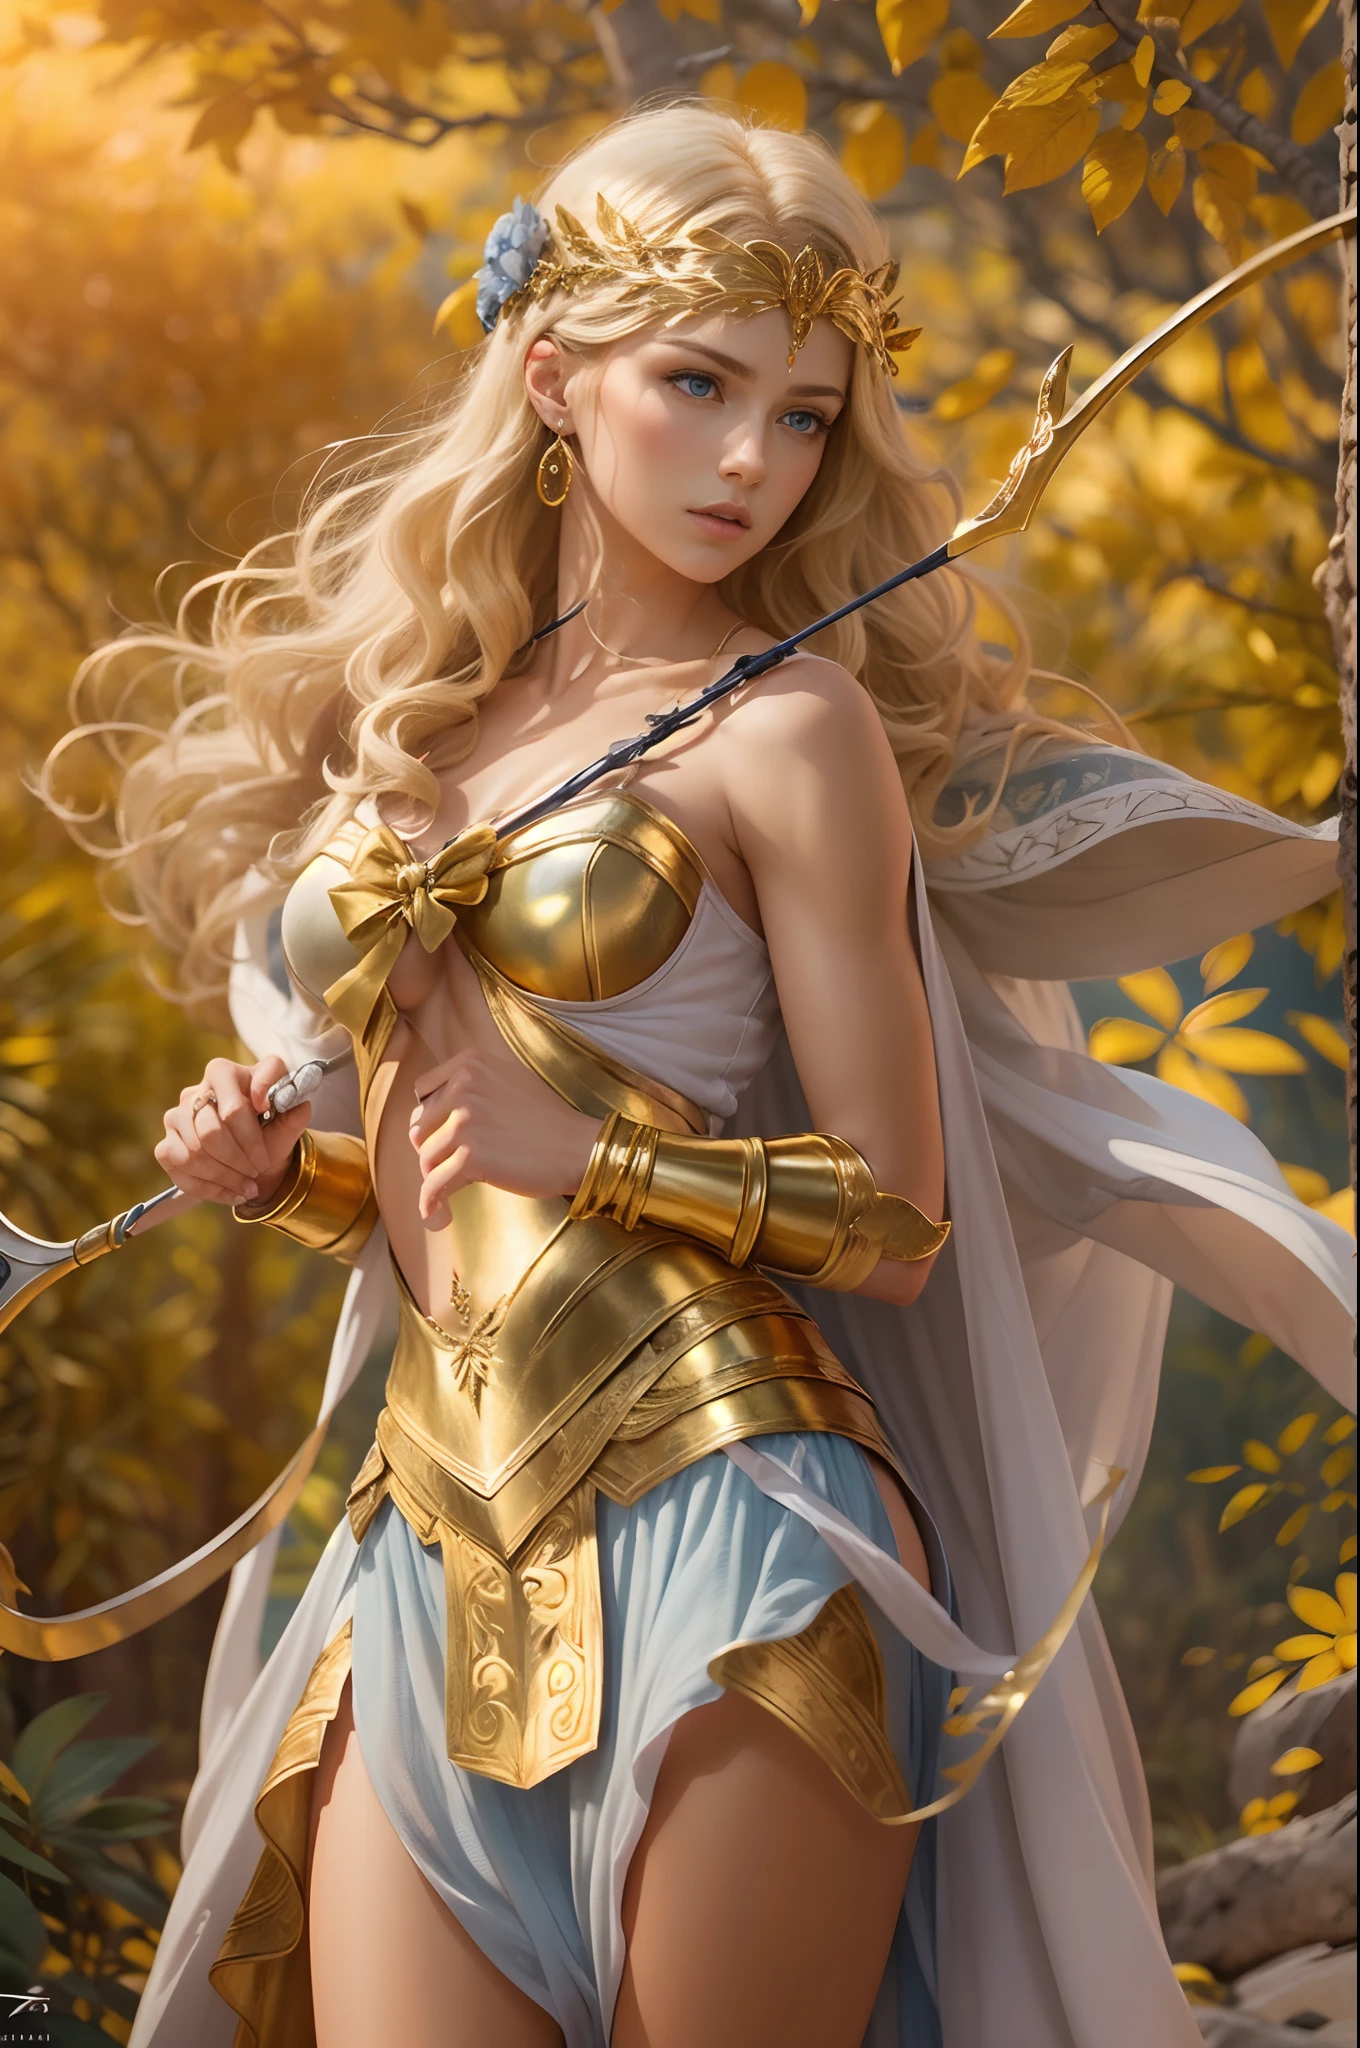 Young virgin greek goddess of wild nature และ hunting, กับ (((ผมสีบลอนด์))) และ (((ดวงตาสีฟ้า))), has amazingly และ stunningly beautiful appearance, มีผิวขาว, slender และ tall, โชว์ขายาวที่สมบูรณ์แบบของเธอ, สวมใส่ {แขนกุด, (สั้นมาก: 1.7), (สีขาว:1.5), ไคตอนกรีก, มีขอบทอง}, หน้าท้อง, "Looks strict และ determined", ถือ ((โบว์ทอง)), ยิงธนู, ลาดตระเวนเพื่อปกป้องสถานที่ศักดิ์สิทธิ์ของเธอจากความชั่วร้าย, Mythical Arcadian mountains และ forests, ตำนานเทพเจ้ากรีก, vibrant และ lively atmosphere, ภาพเหมือนจริง, ไฮเปอร์เรียลลิสม์, คุณภาพพิเศษ, รายละเอียดสุดยอด, ultra accurate description of hและs, ผลงานชิ้นเอก, 8ก, เอชดีอาร์